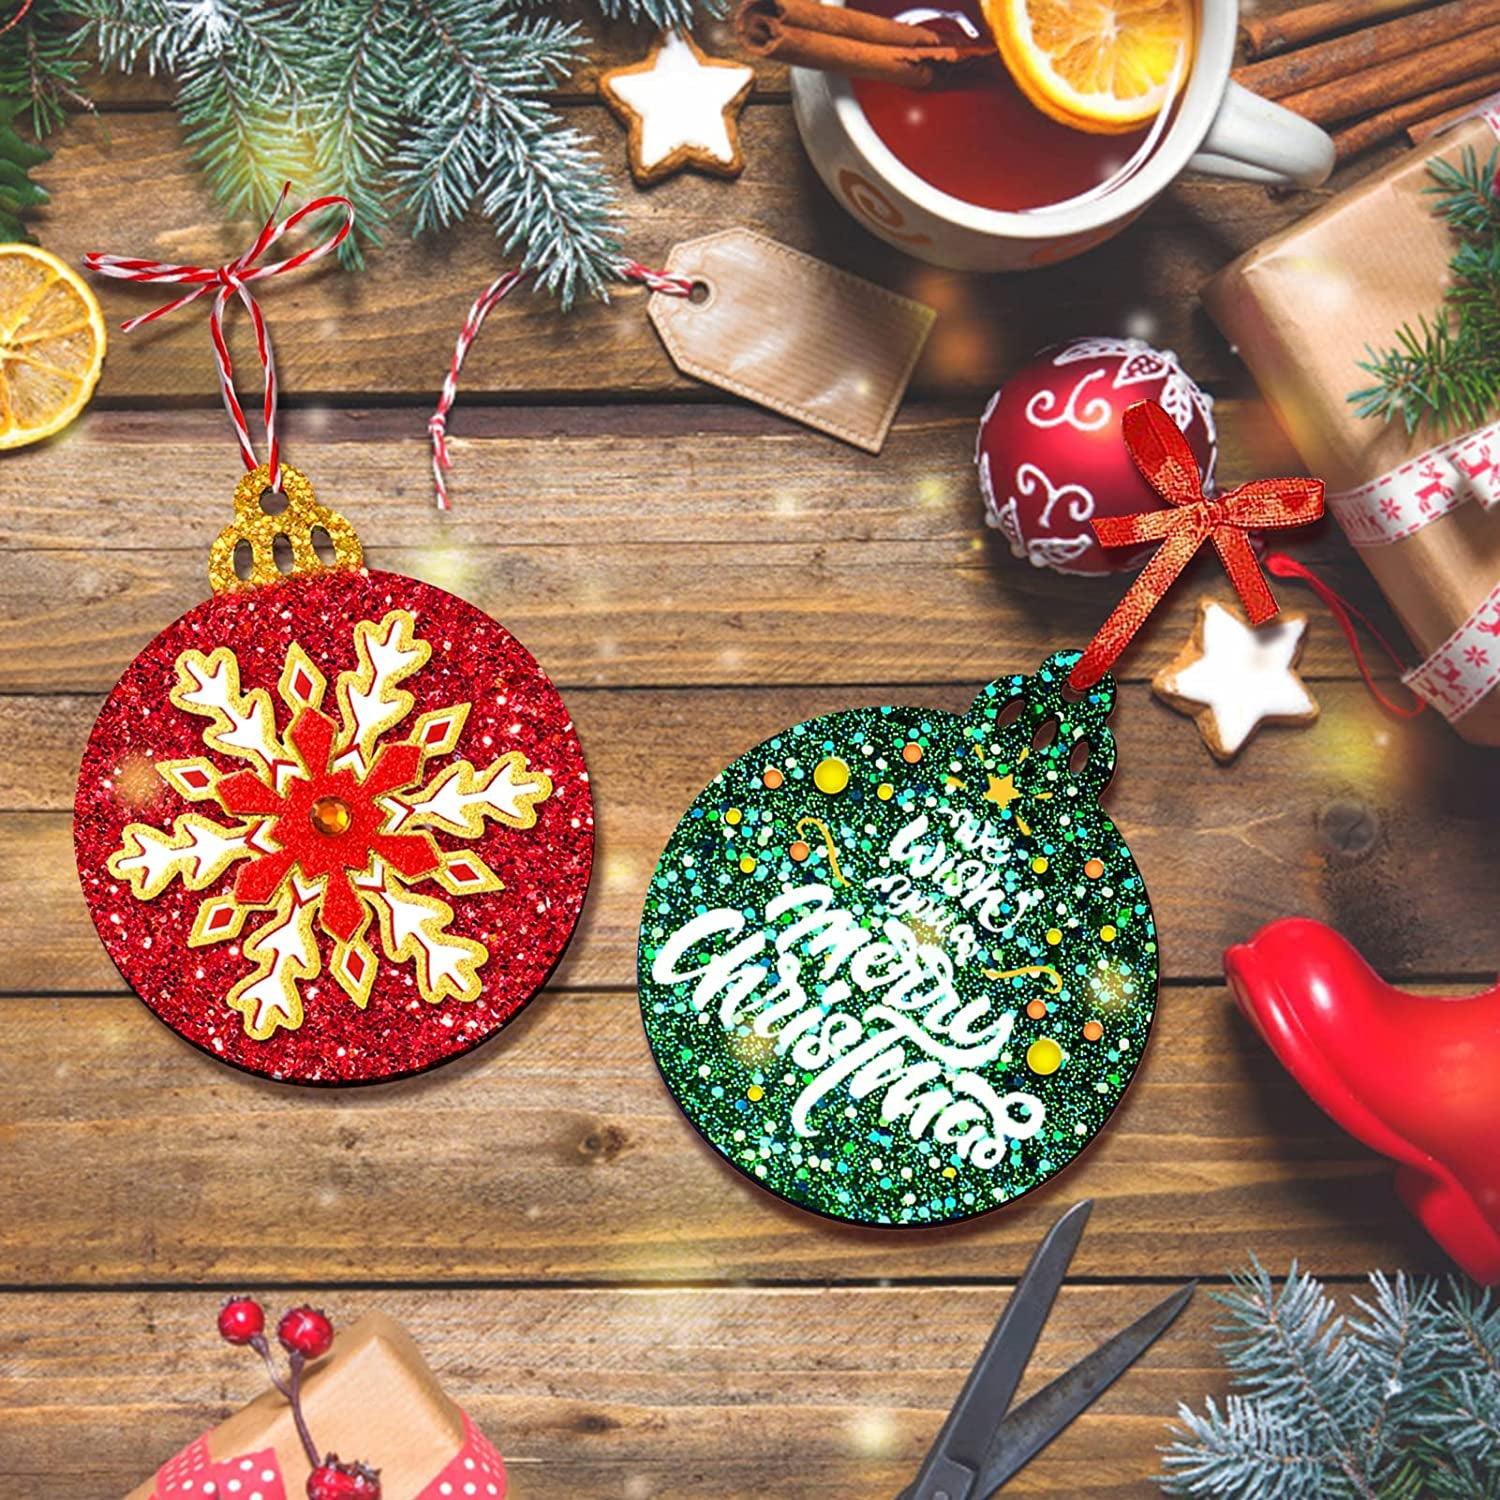 Christmas Resin Molds Silicone, 4 Pcs Christmas Ornaments round Shape Pendant Epoxy Resin Molds, DIY Crafts Jewelry Keychain Making Christmas Decorations - WoodArtSupply